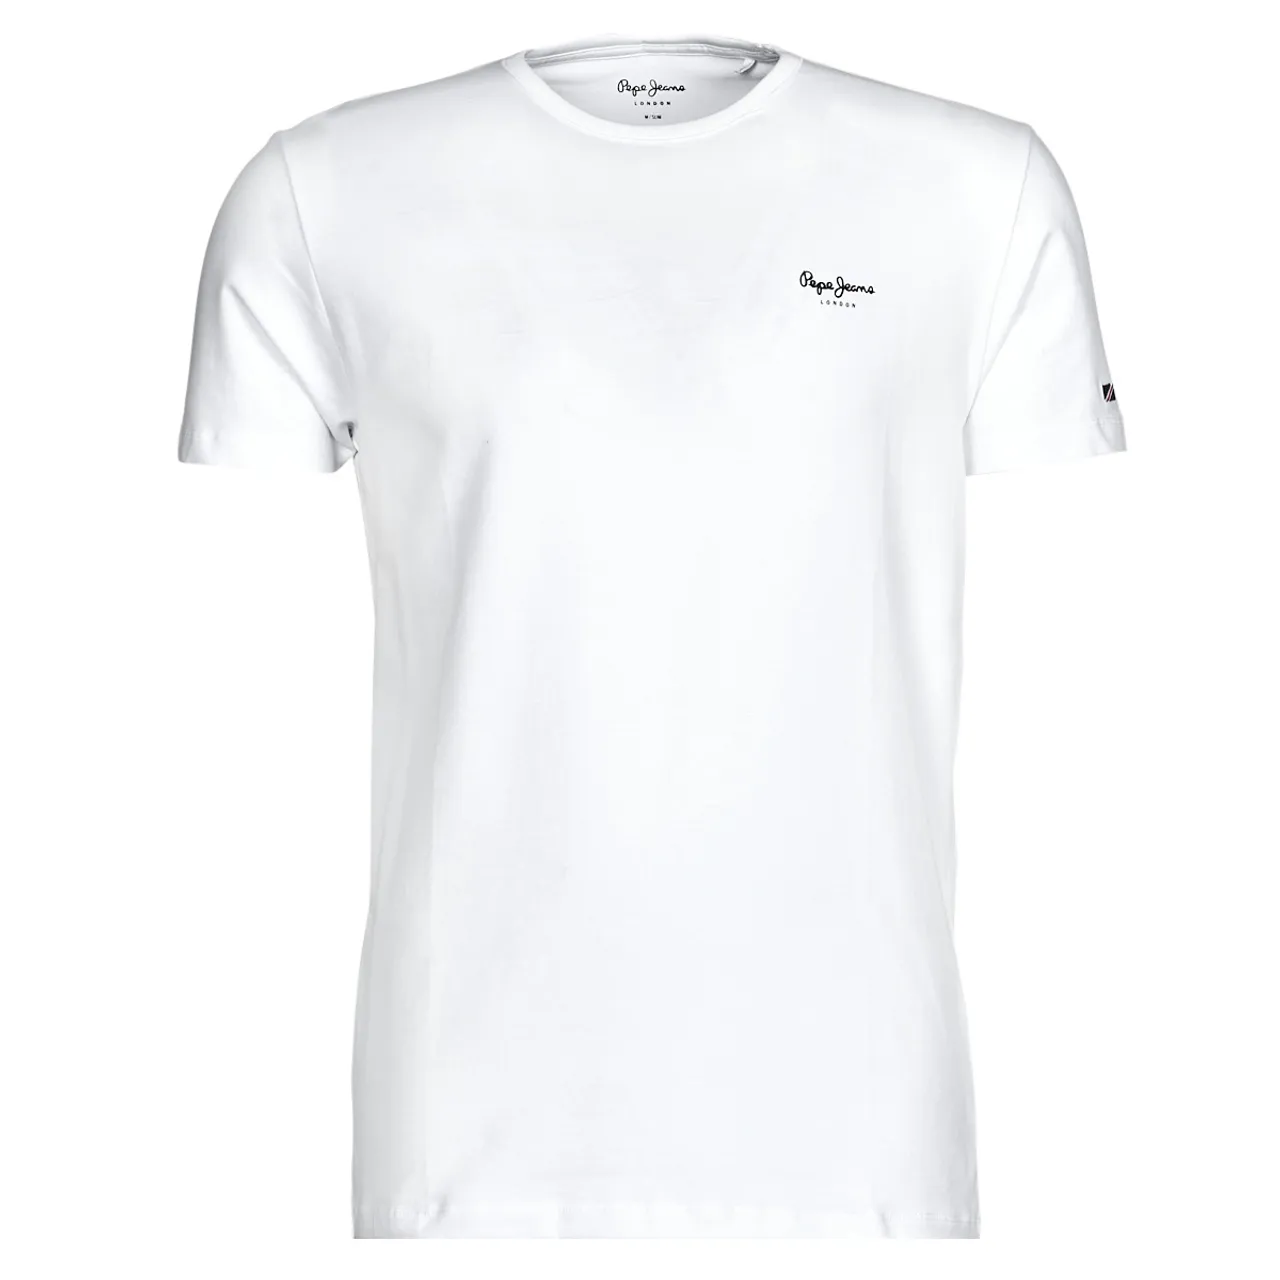 Pepe jeans  ORIGINAL BASIC NOS  men's T shirt in White